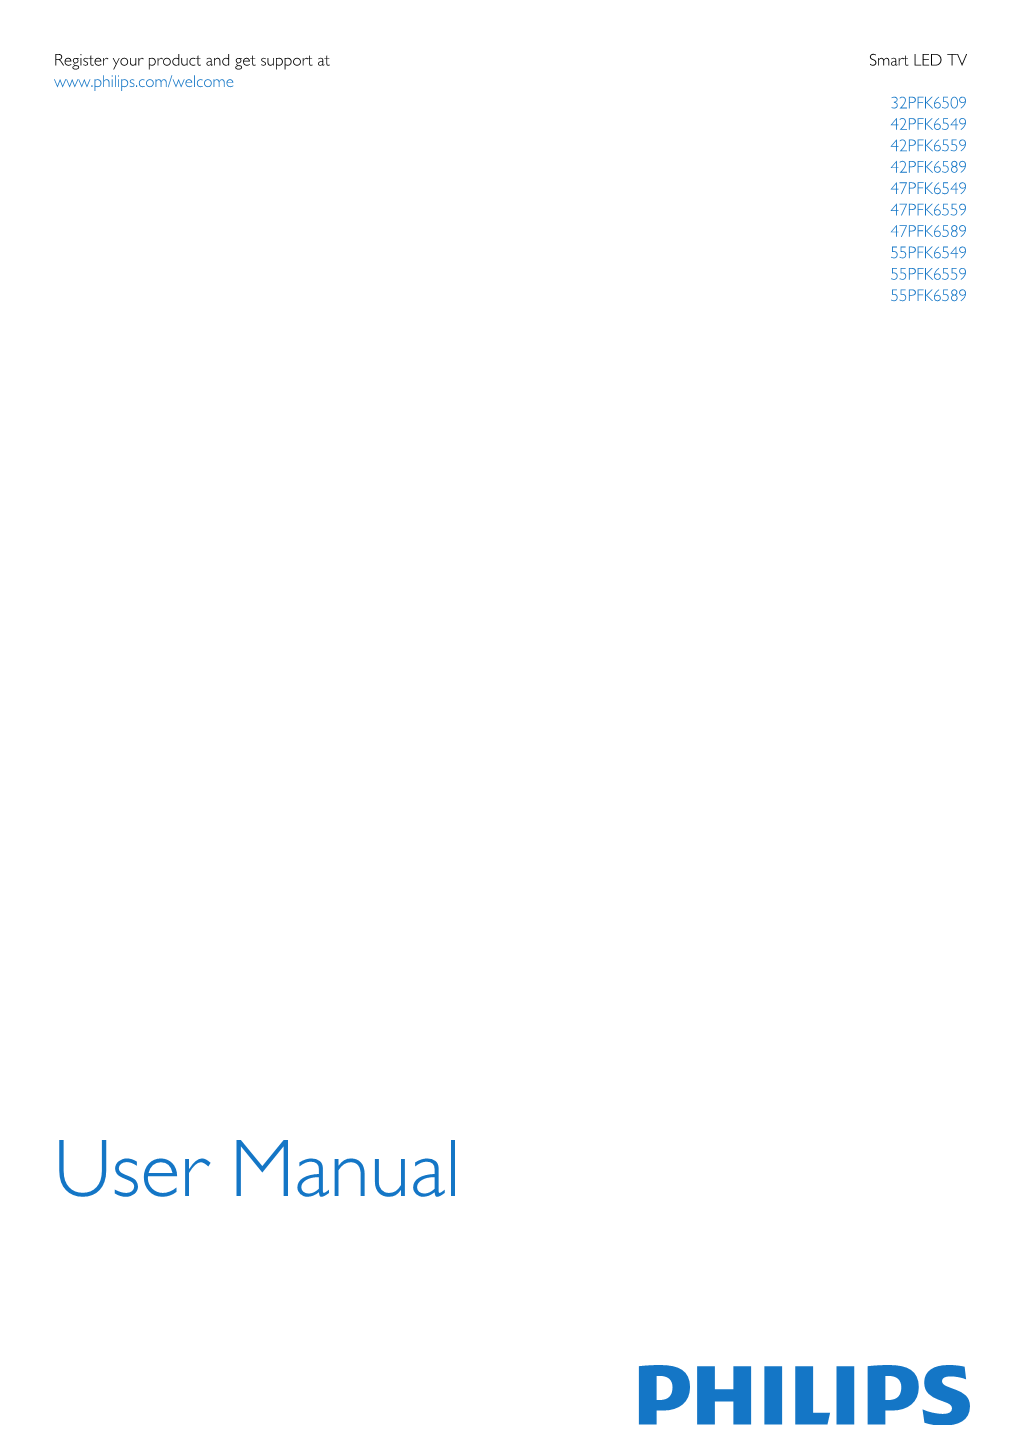 User Manual Contents